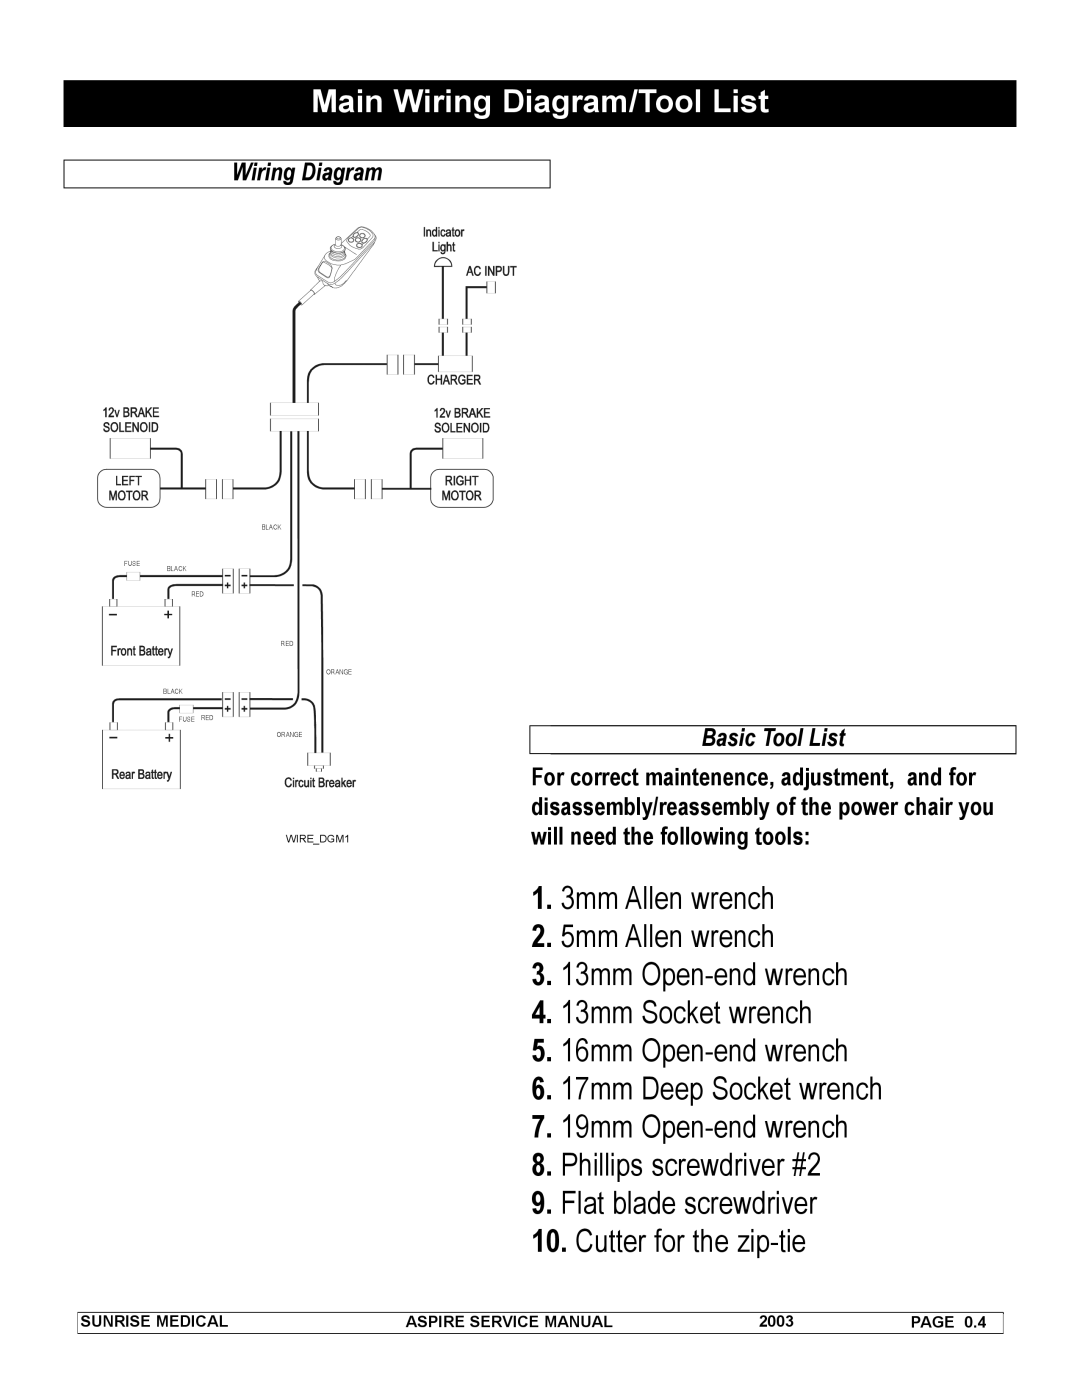 Sunrise Medical 931157 service manual Main Wiring Diagram/Tool List 